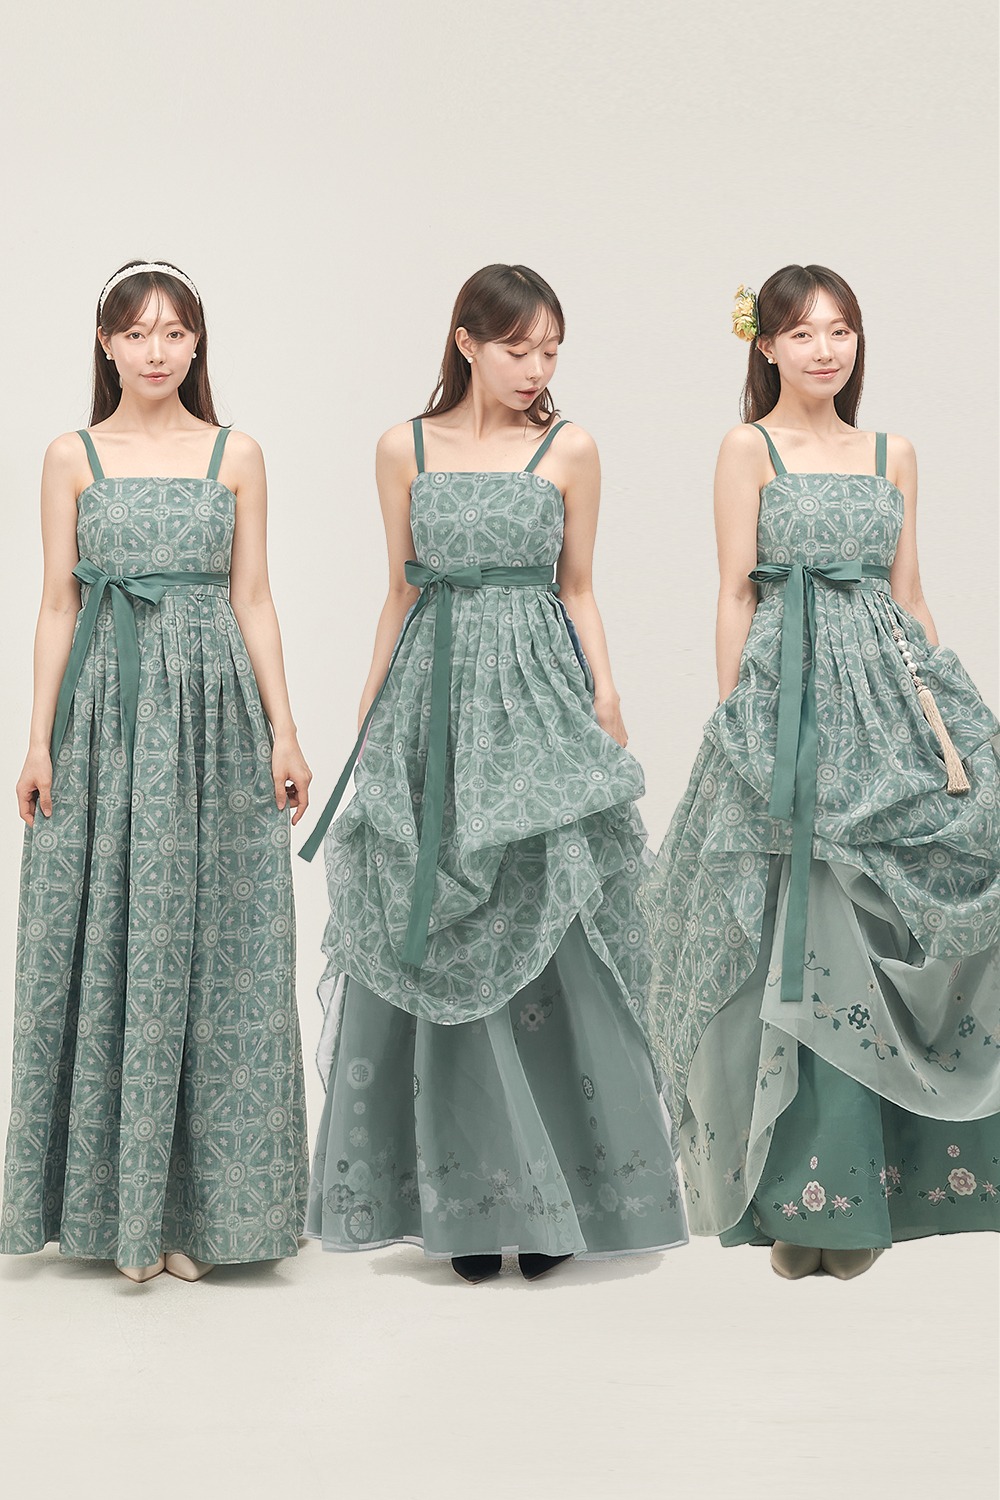 King taejo Eojin Adjust Hanbok Dress [Sage Green]